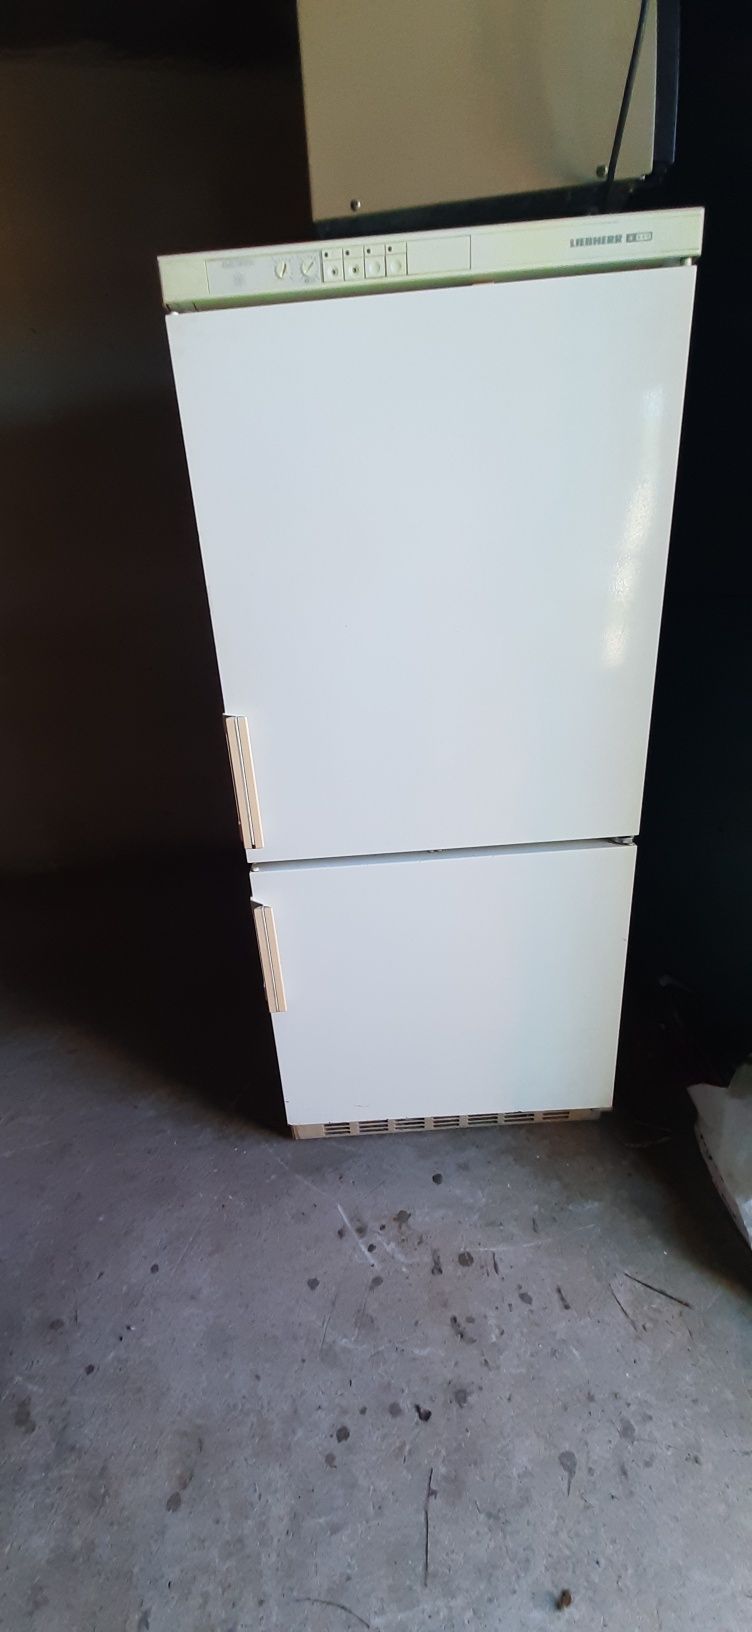 Холодильник Liebherr